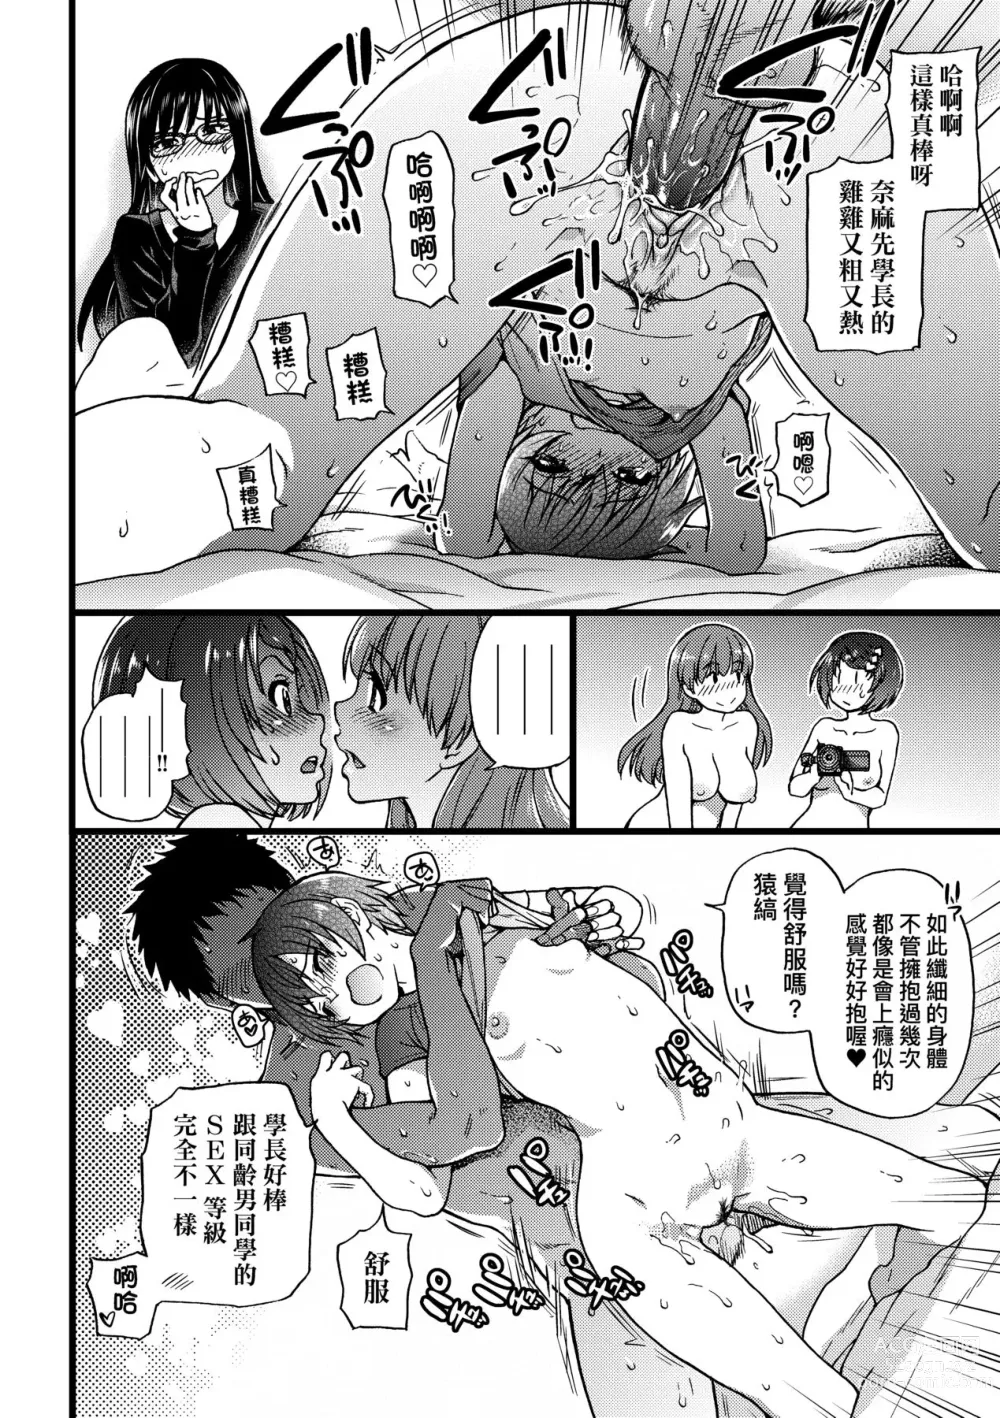 Page 225 of manga Ero Pippi (decensored)